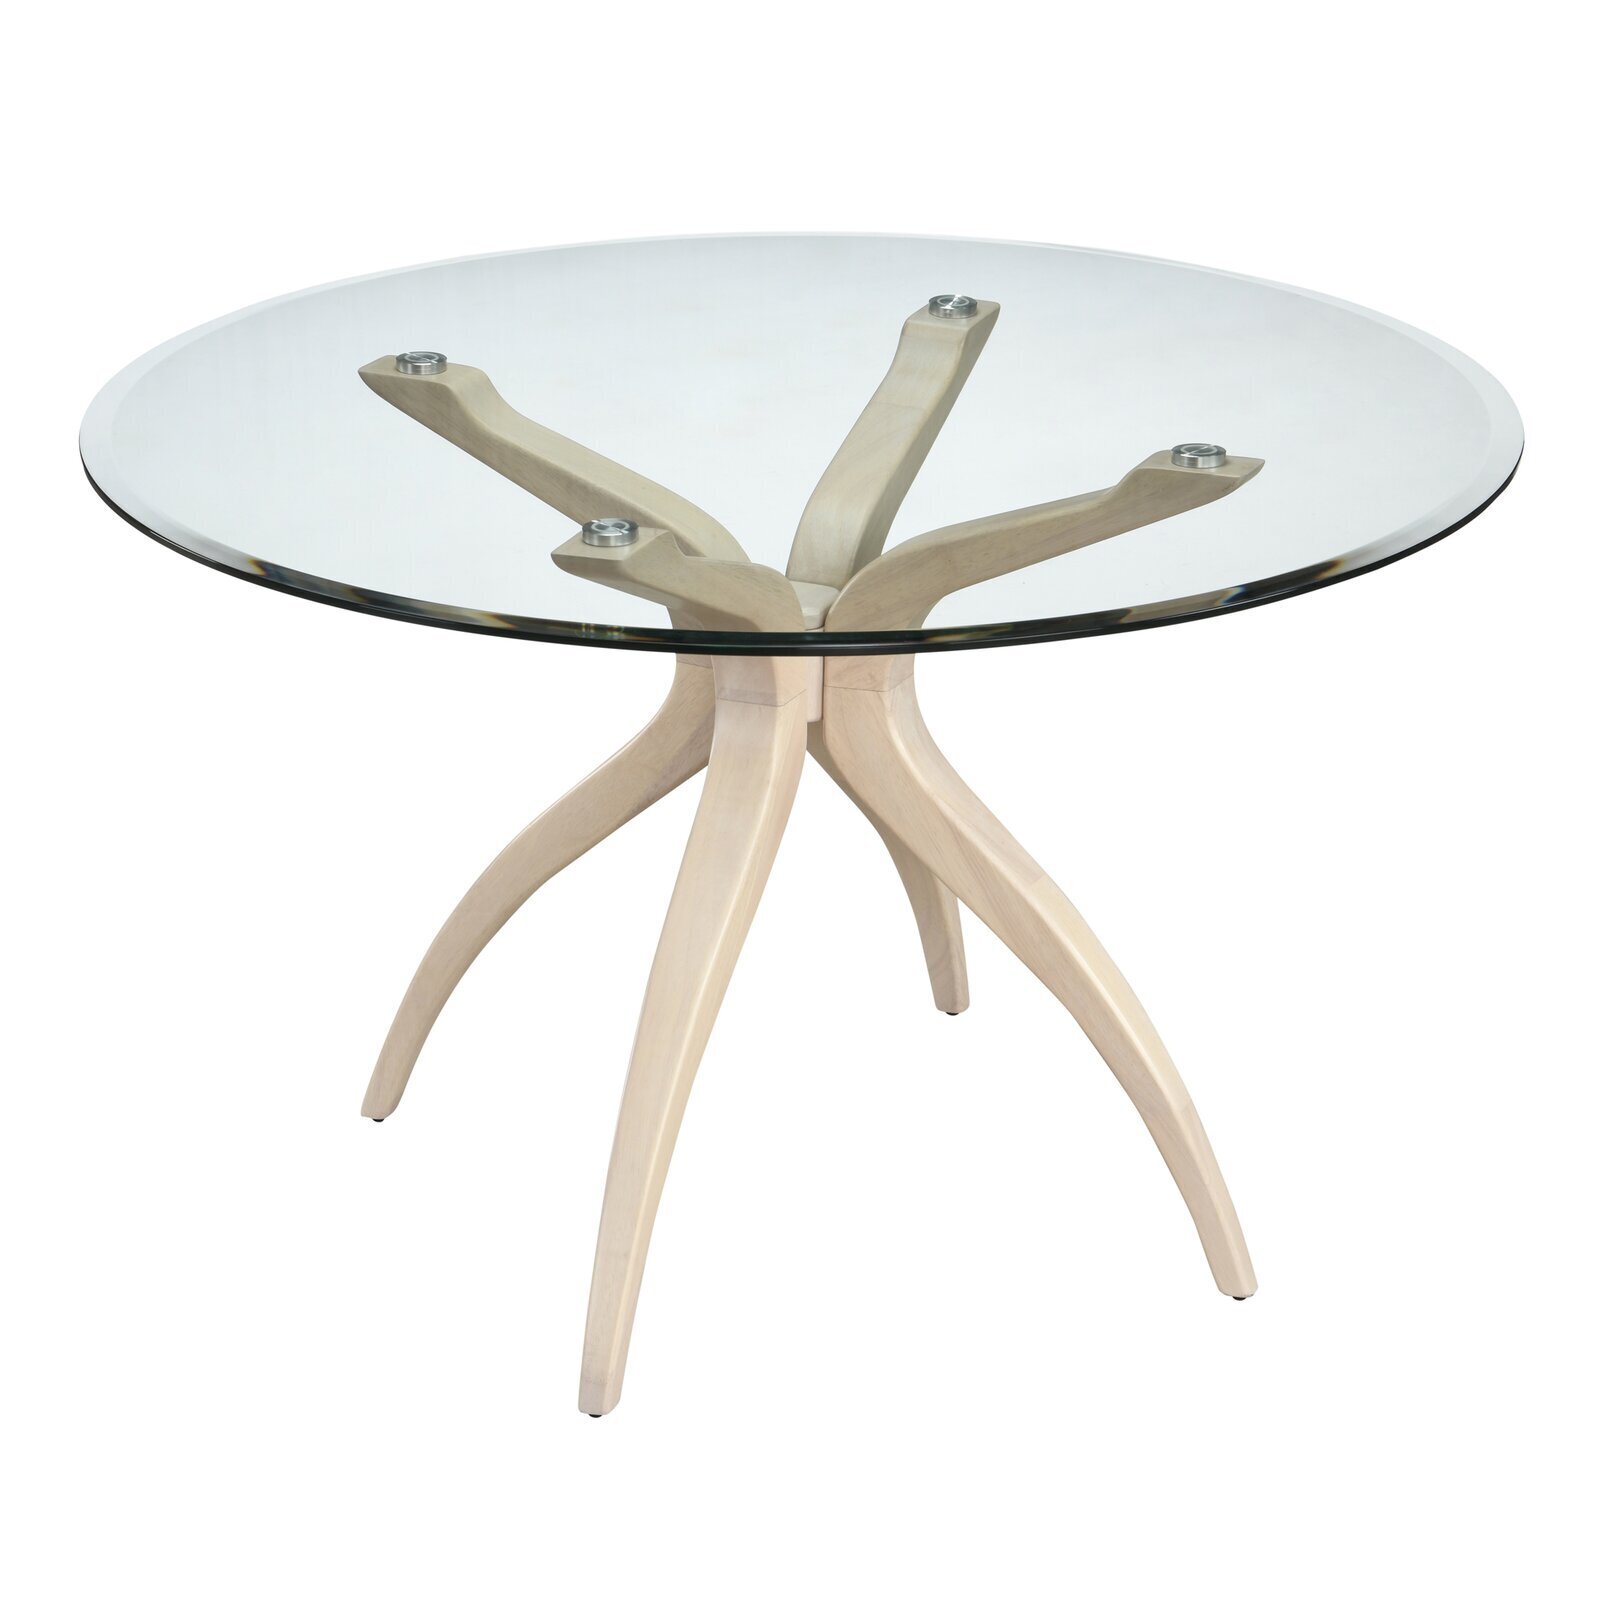 Mid century modern round dining table